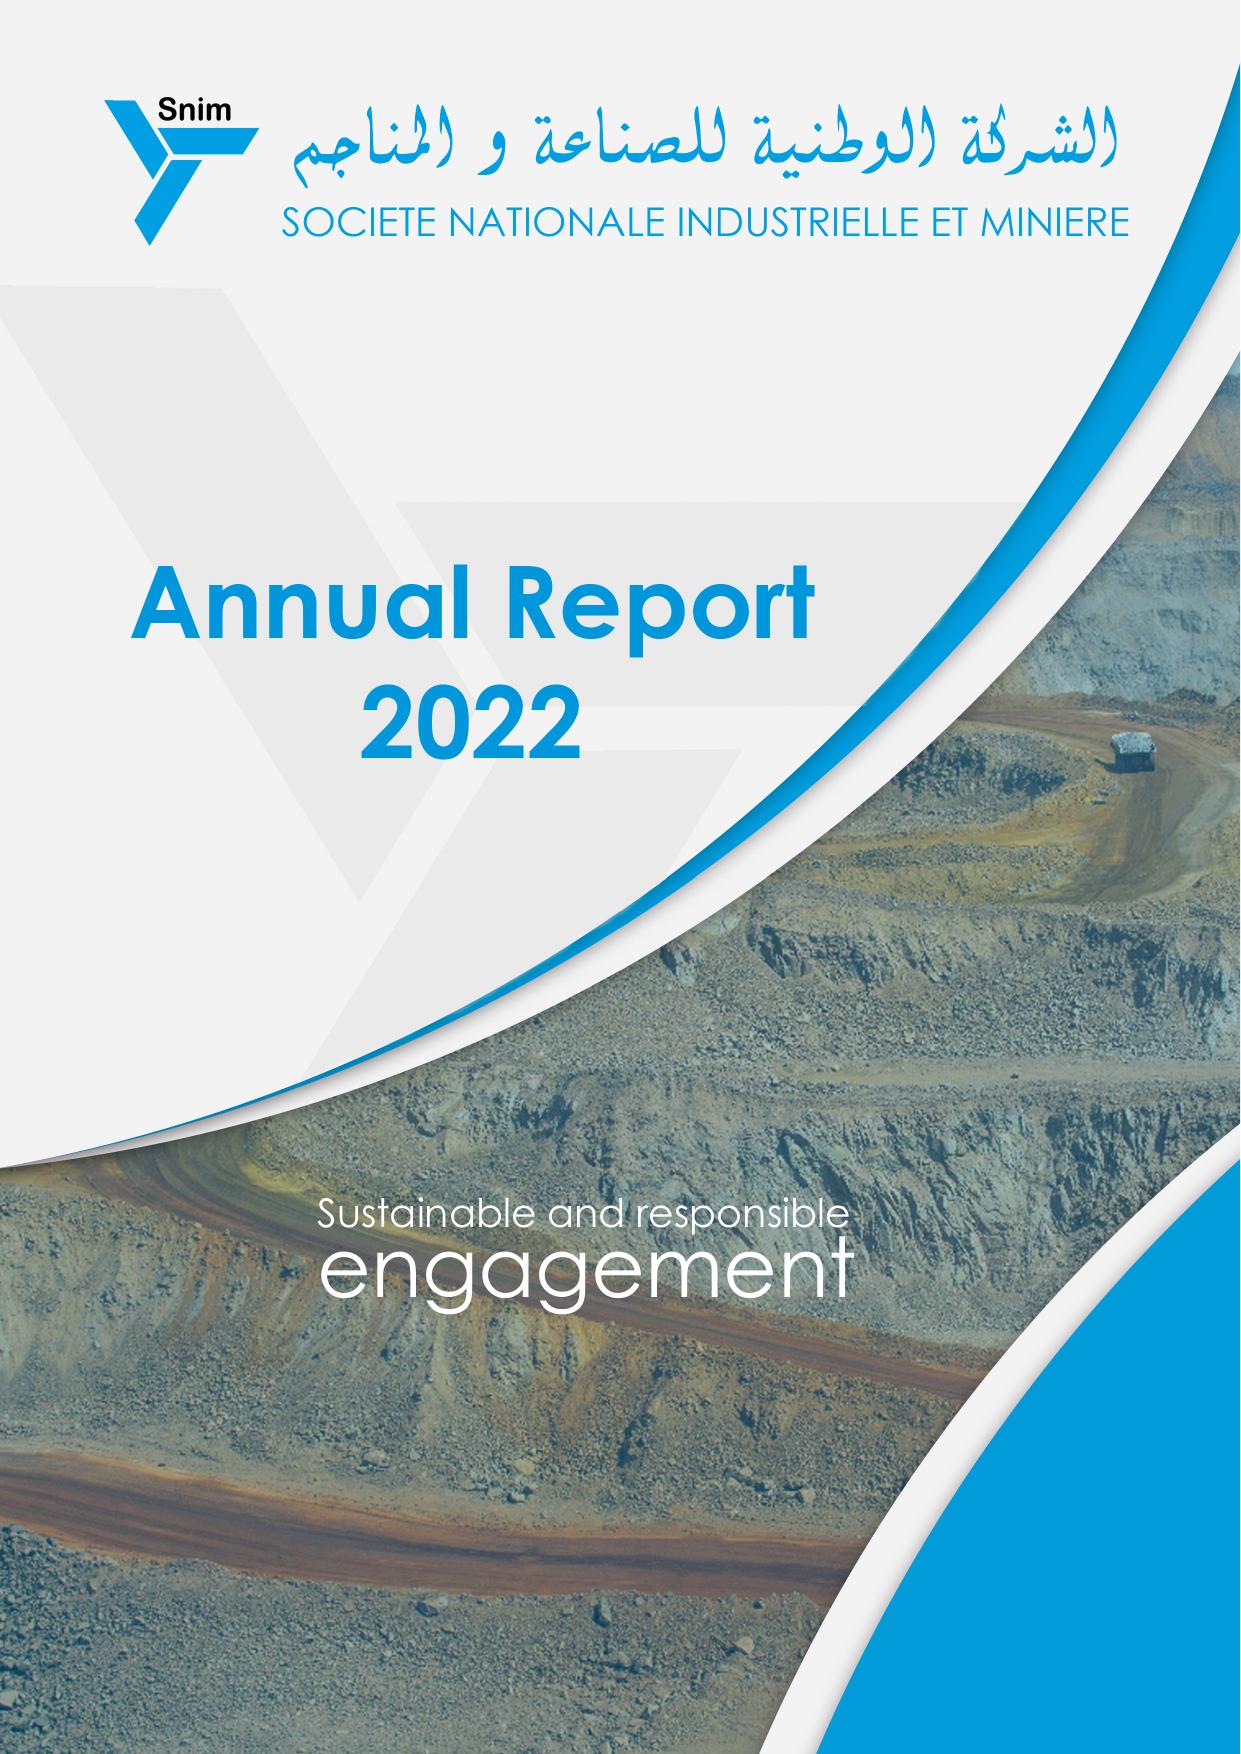 SNIM Annual Report